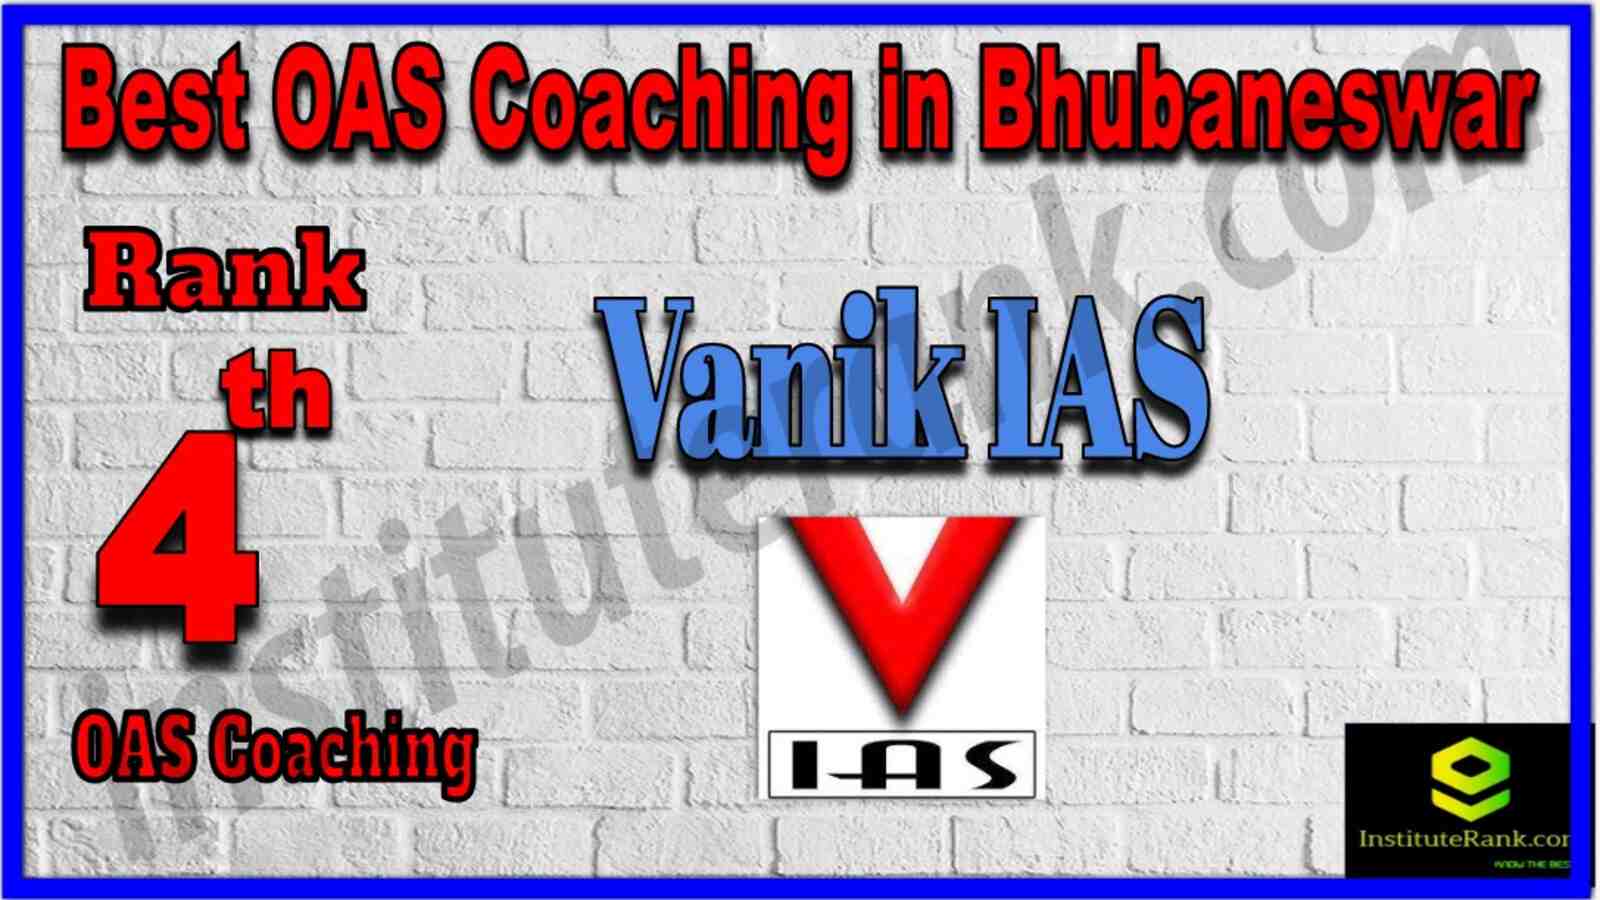 Rank 4 Best OAS Coaching in Bhubaneswar